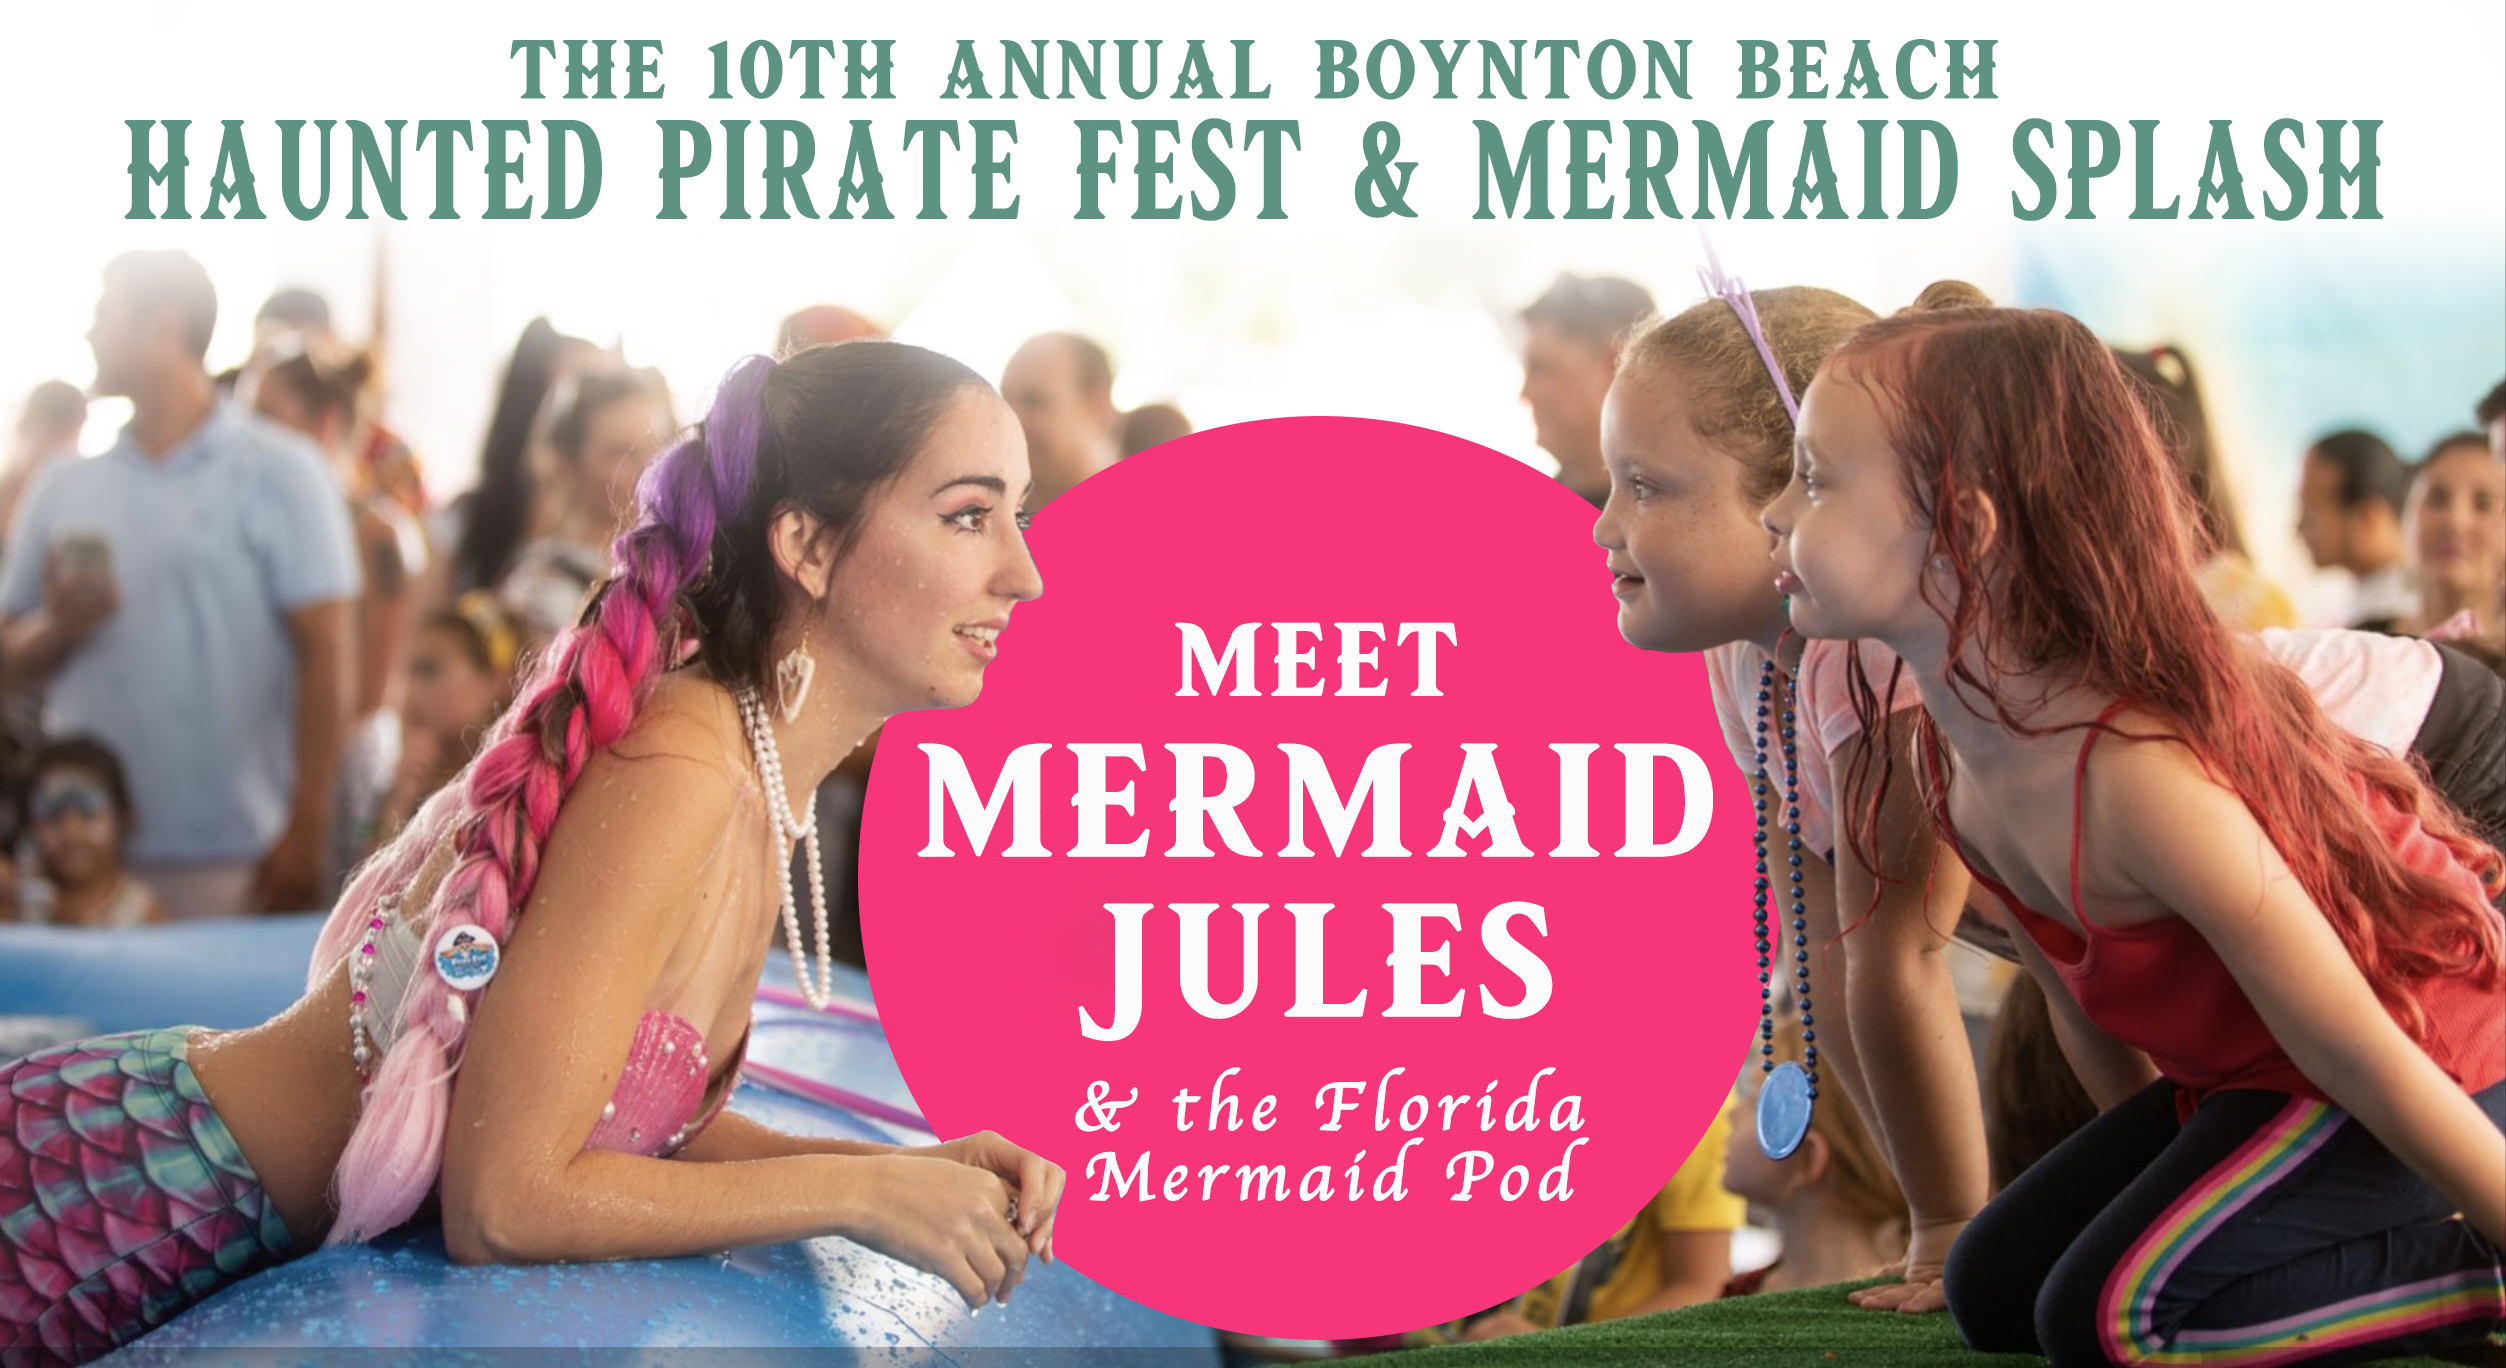 Meet Mermaid Jules at the 10th Annual Boynton Beach Haunted Pirate Fest & Mermaid Splash